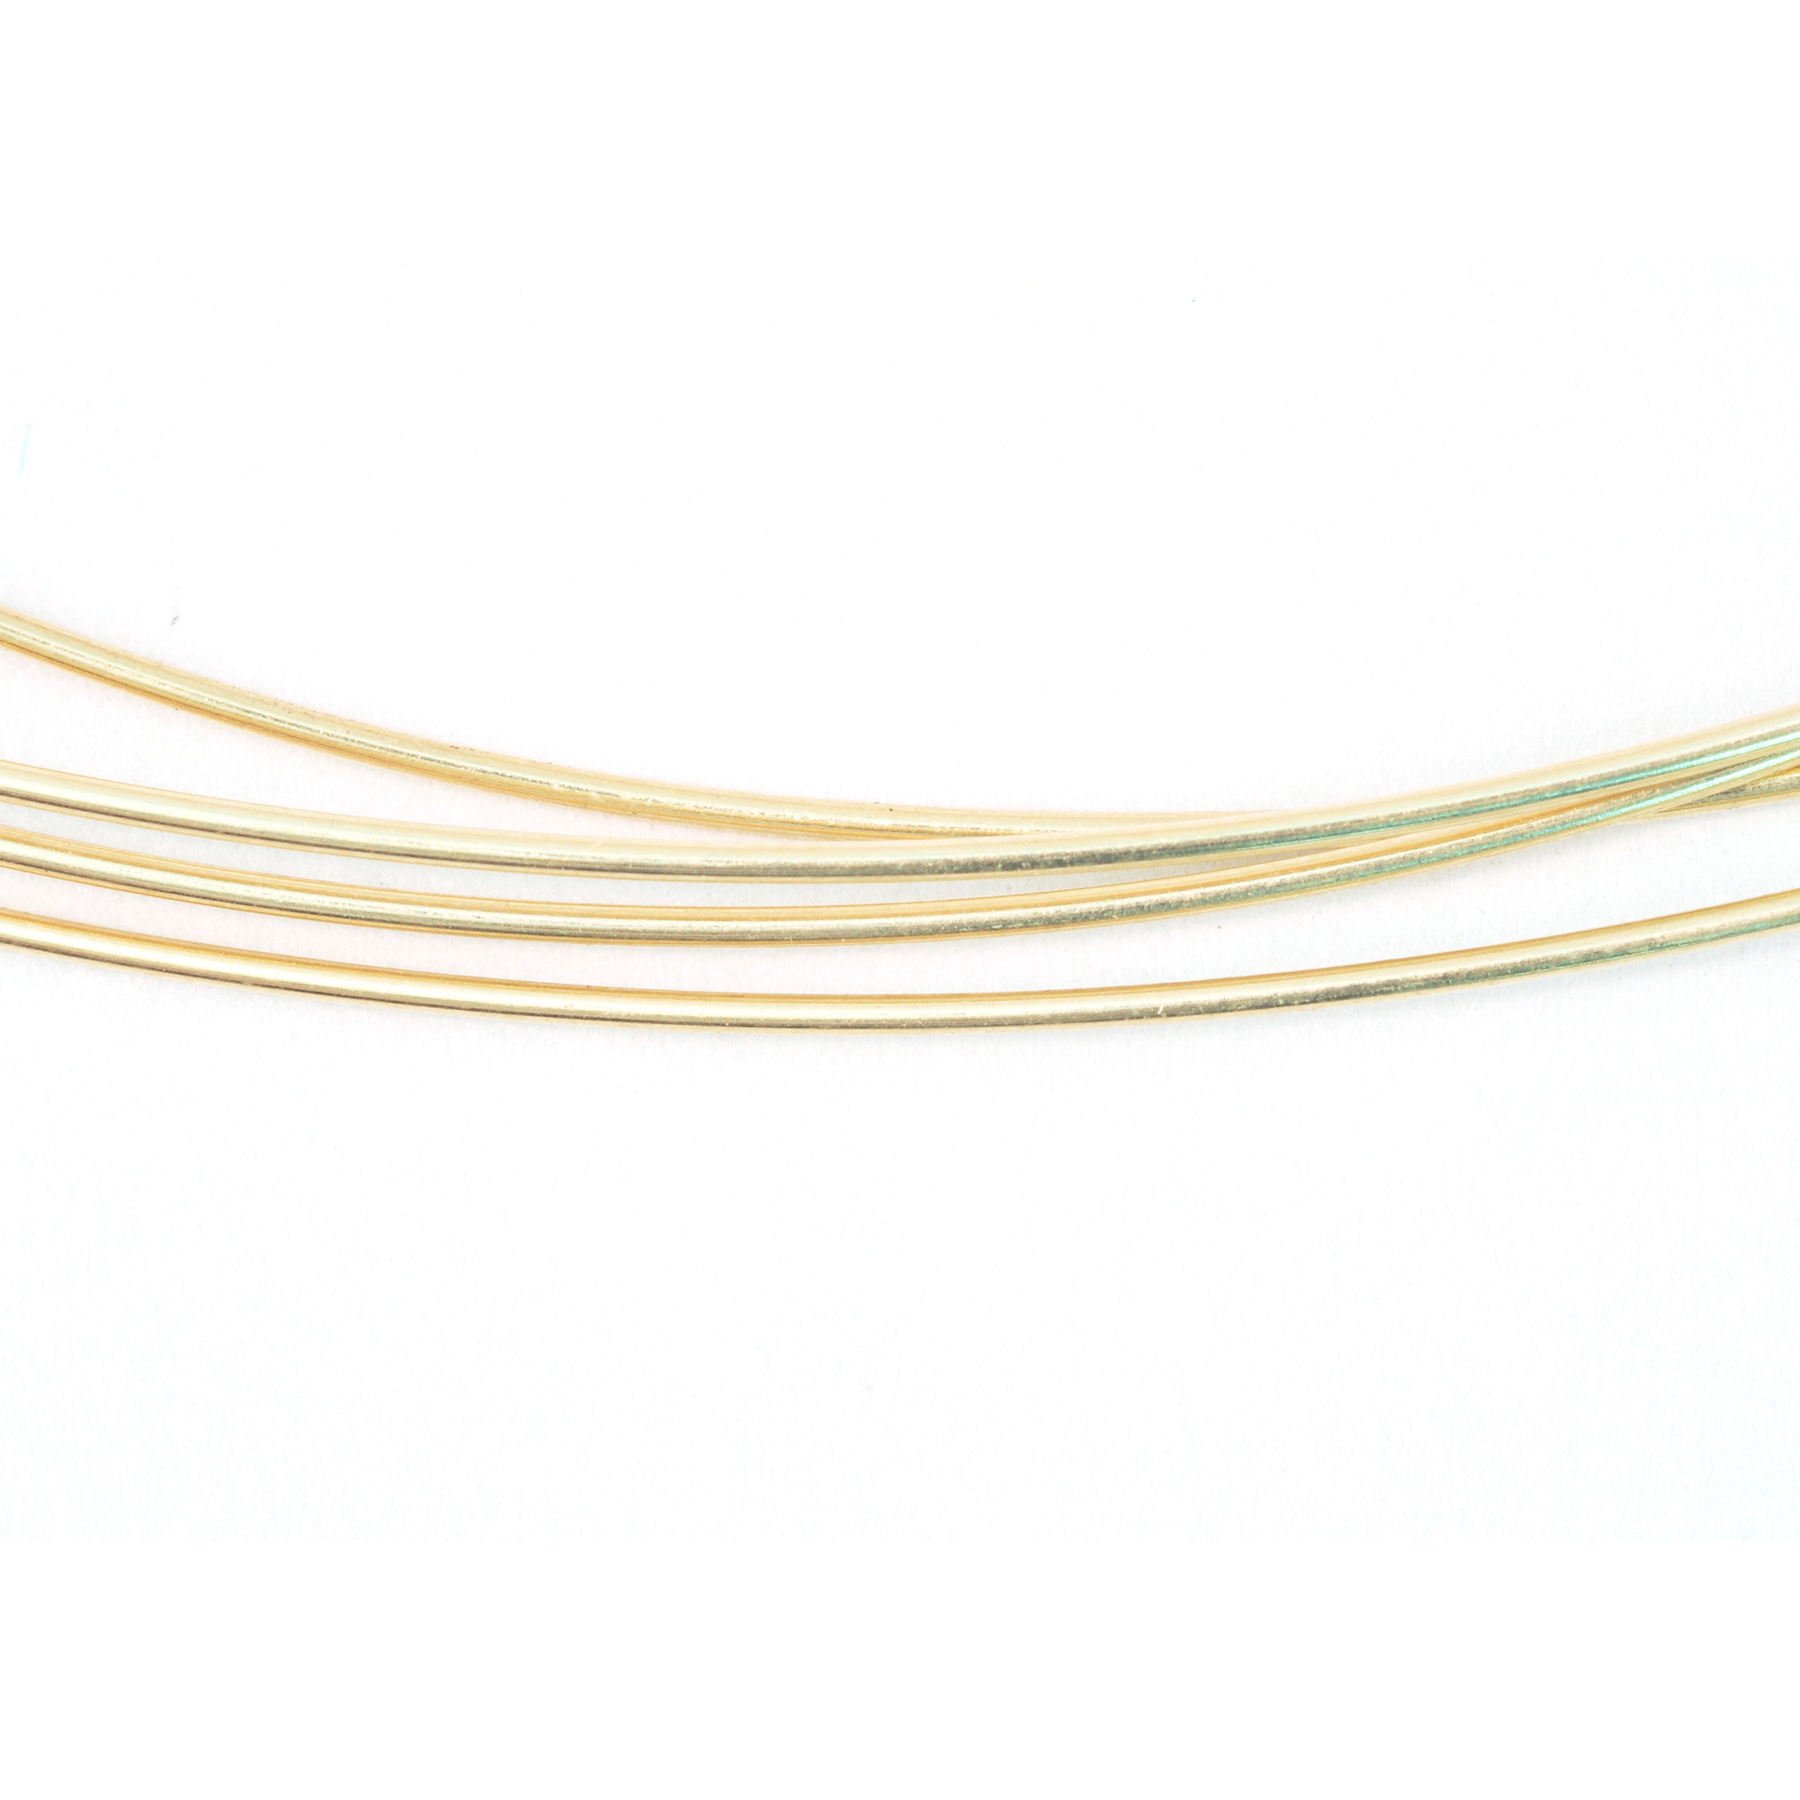 Solid 14K Gold Solder Wire 58% Real Gold X Easy, Density .071 DWT per Inch  22 Gauge Melt 1325 Degrees 